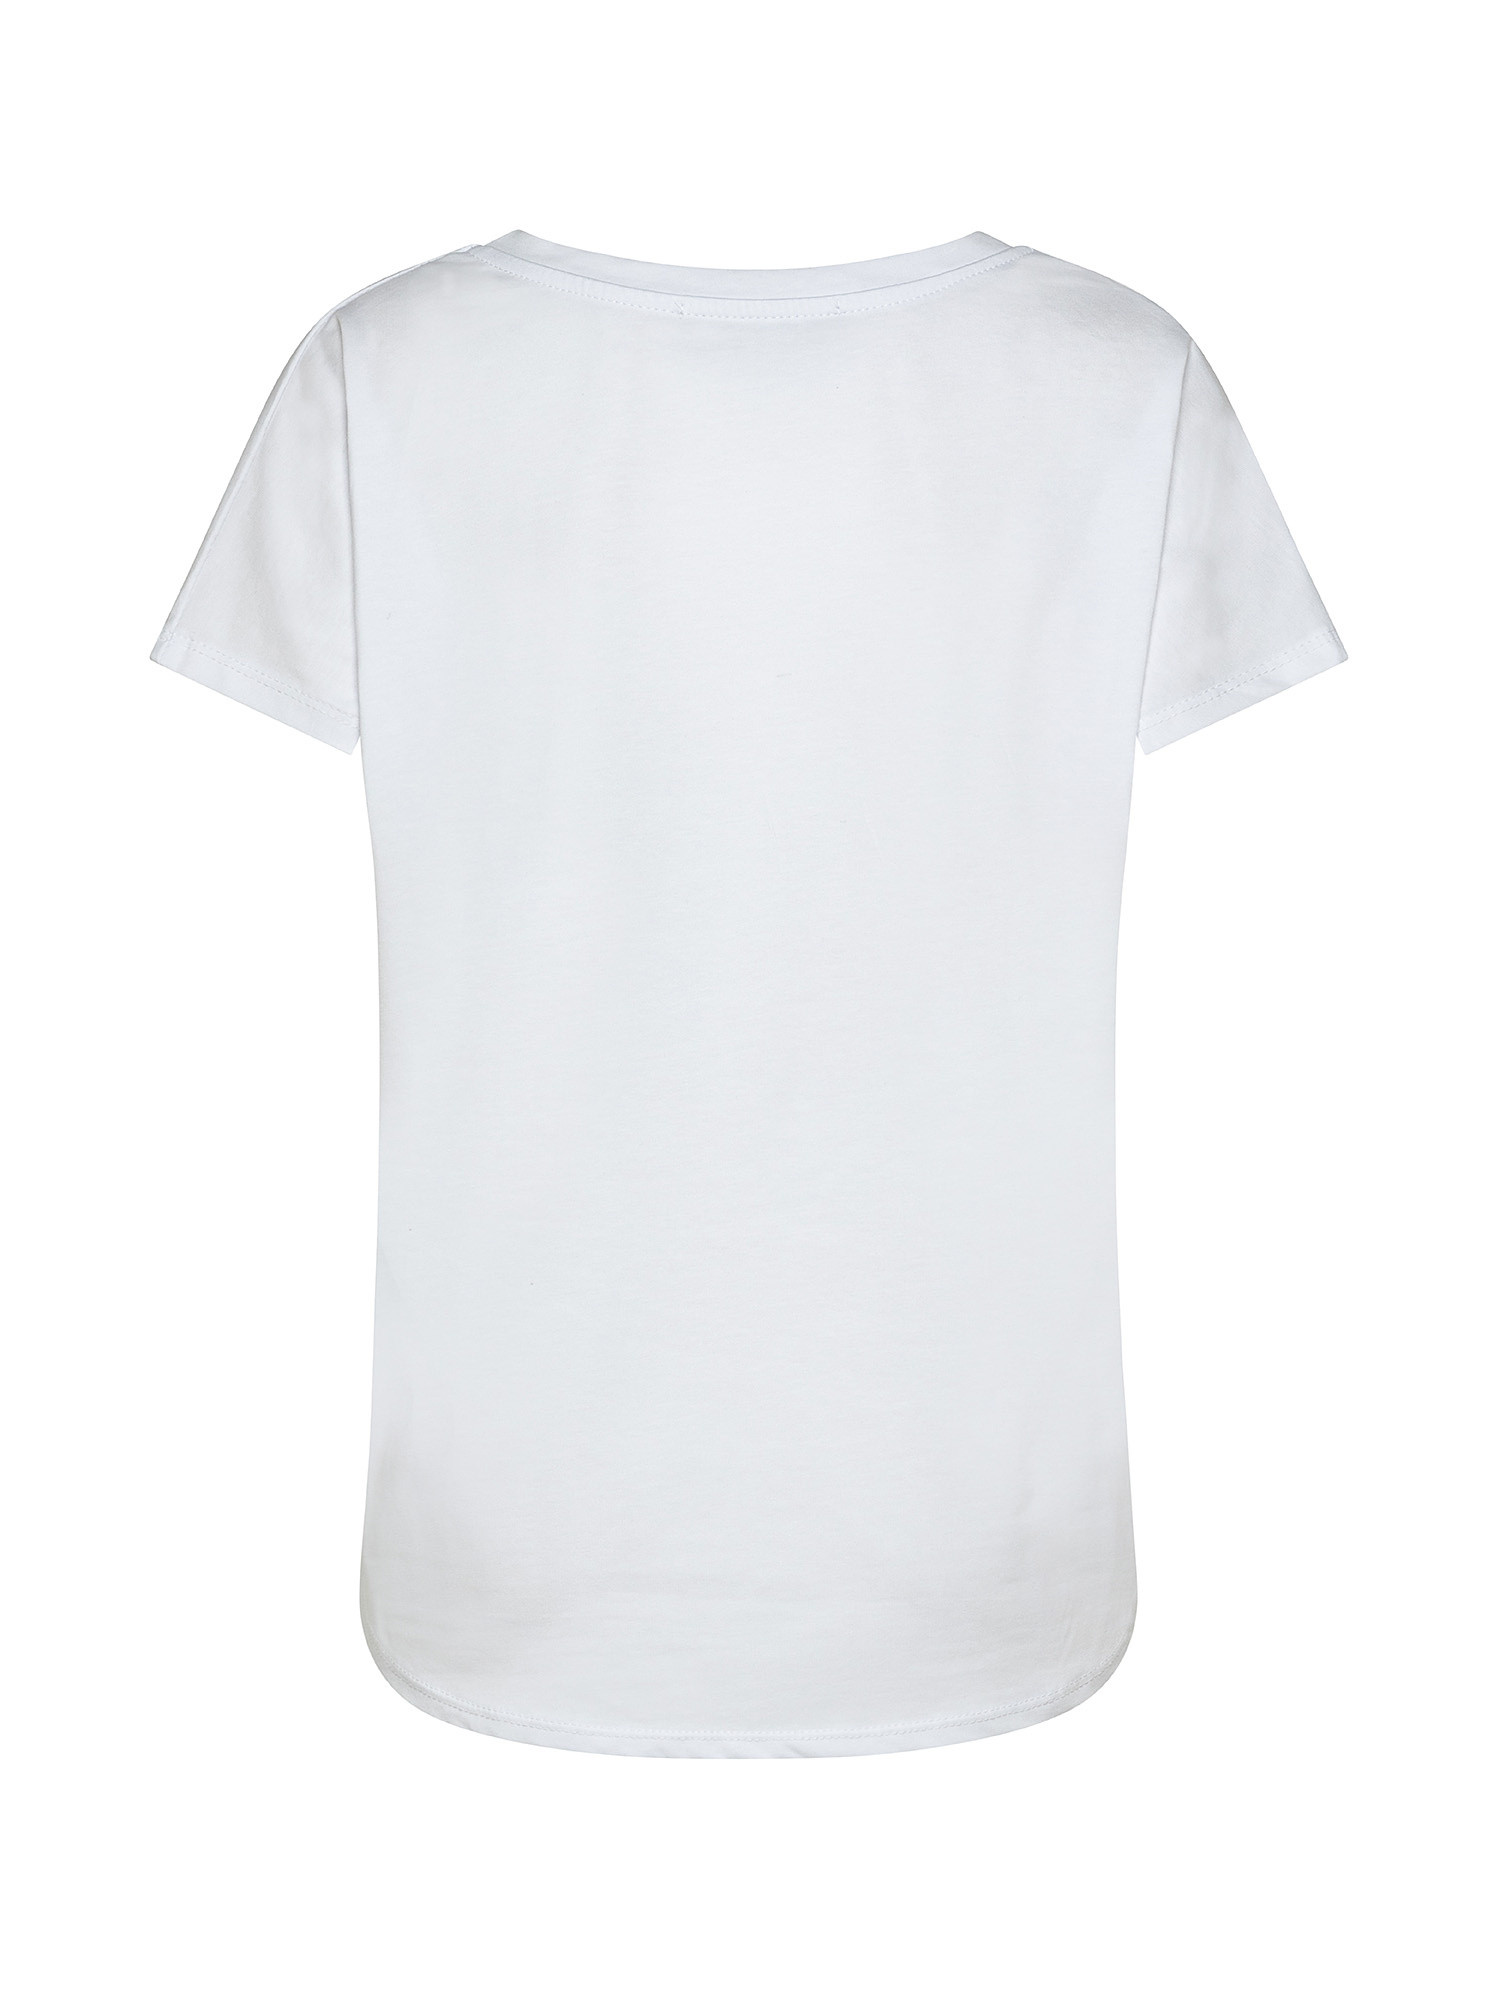 T-shirt con stampa fiori e foglie, Bianco, large image number 1